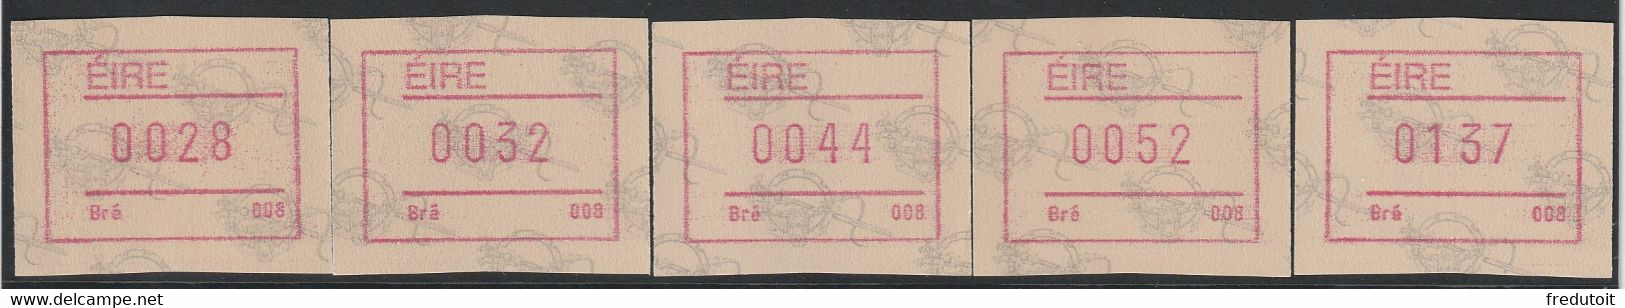 IRLANDE - Timbres Distributeurs / FRAMA  ATM - N°4** (1992) Bré 008 - Viñetas De Franqueo (Frama)